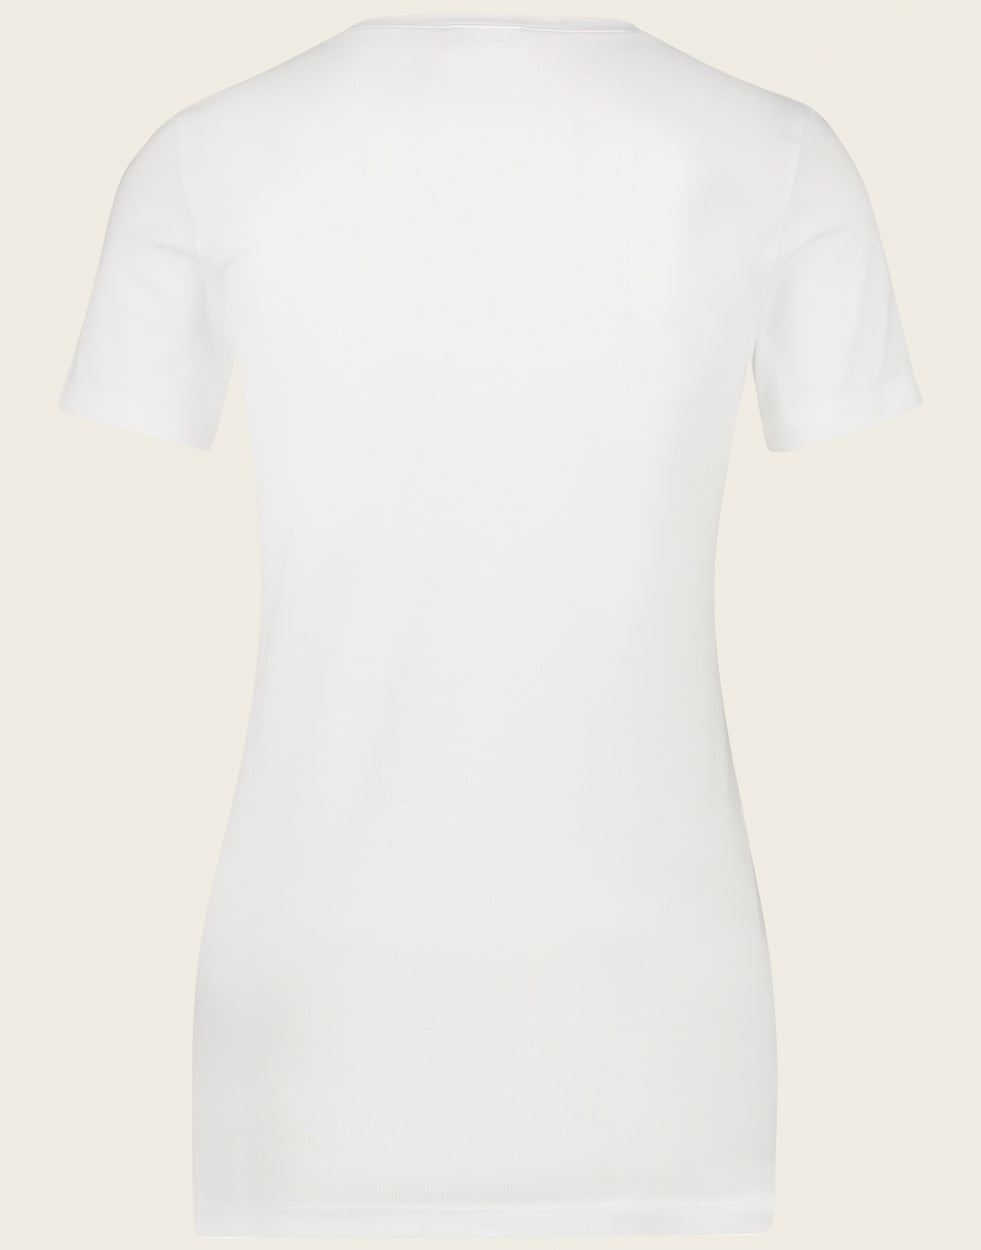 T-shirt Amore Organic Cotton | White